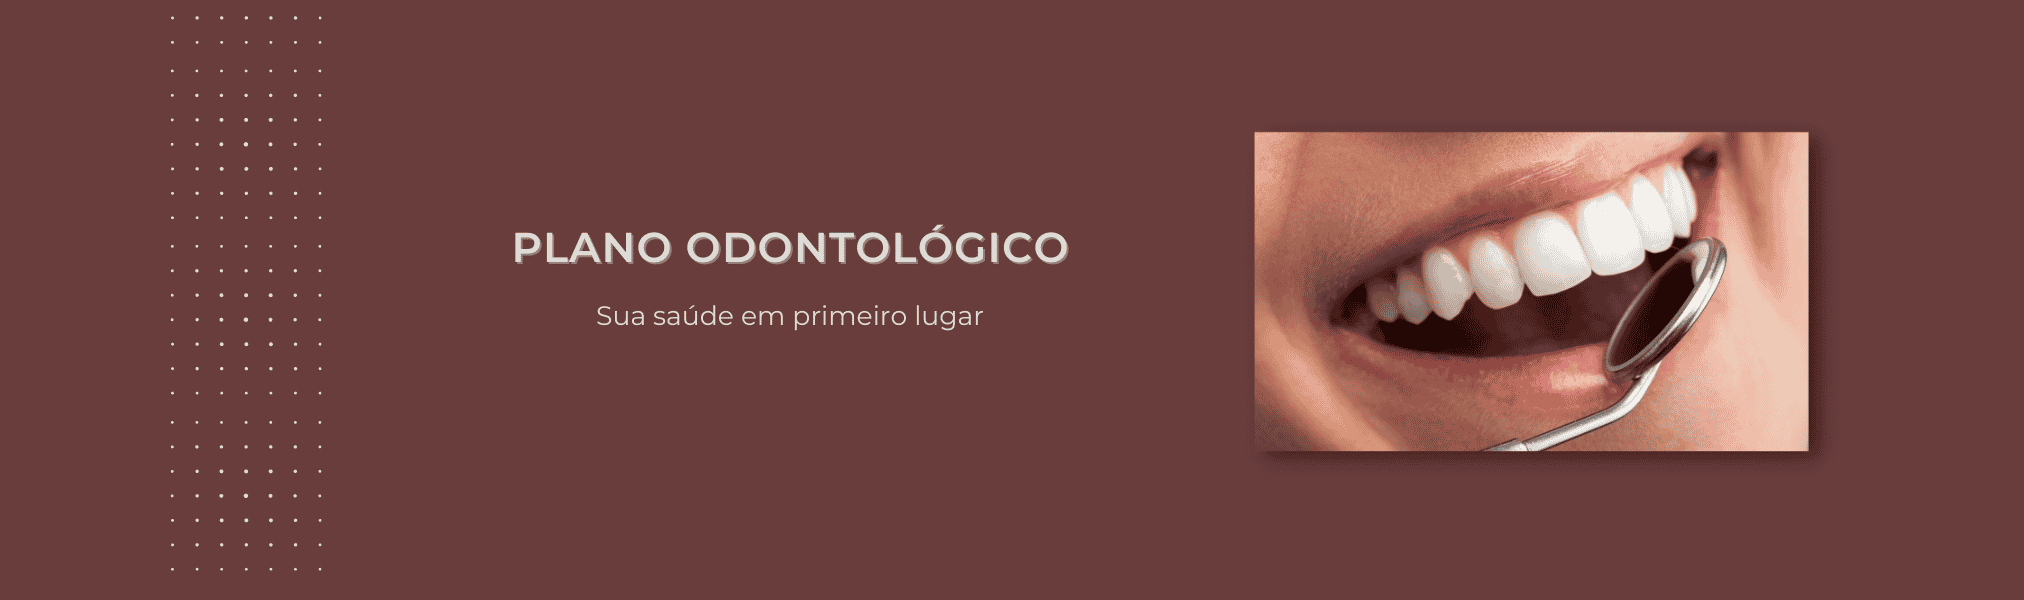 Banner Plano Odontologico